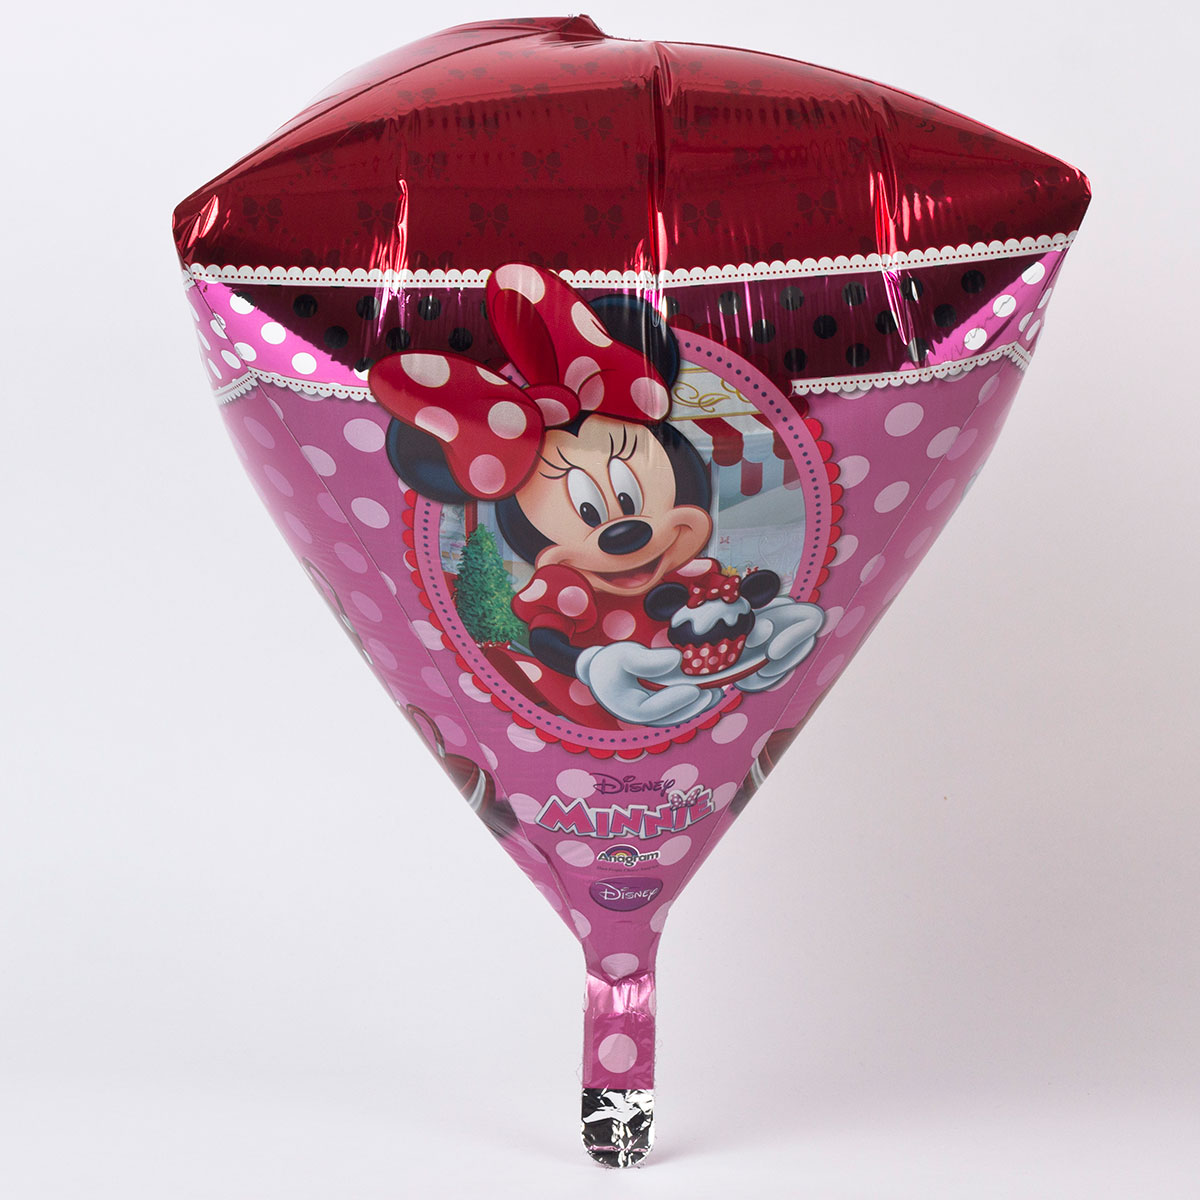 Disney Minnie Mouse Diamondz Helium Balloon (Deflated)